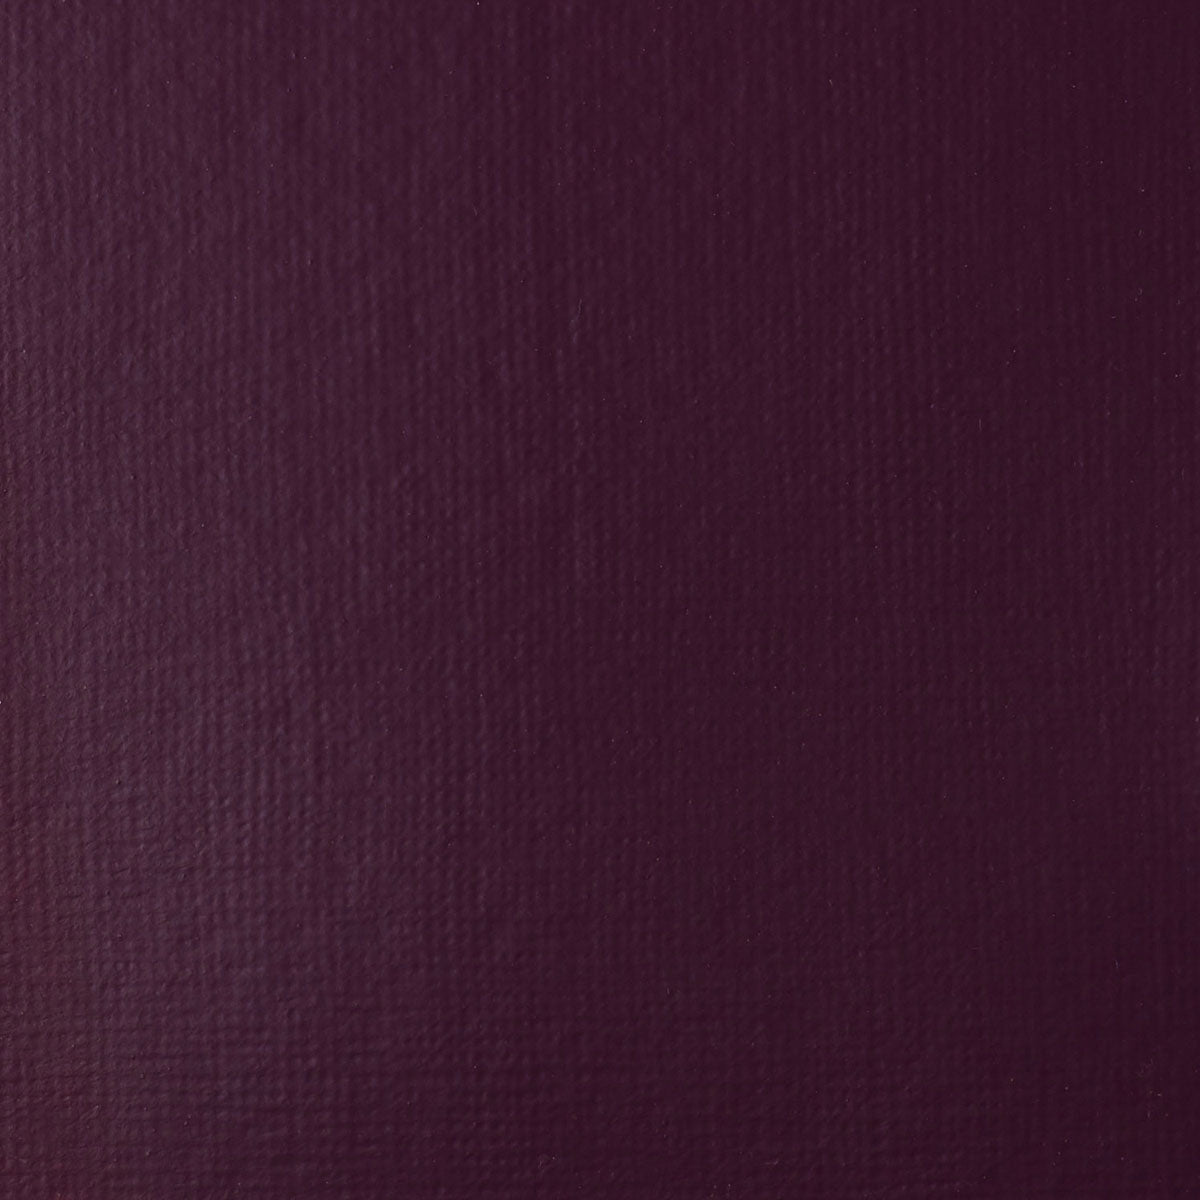 Liquitex - Acryl Gouache 59ml S2 - Prisma Violett